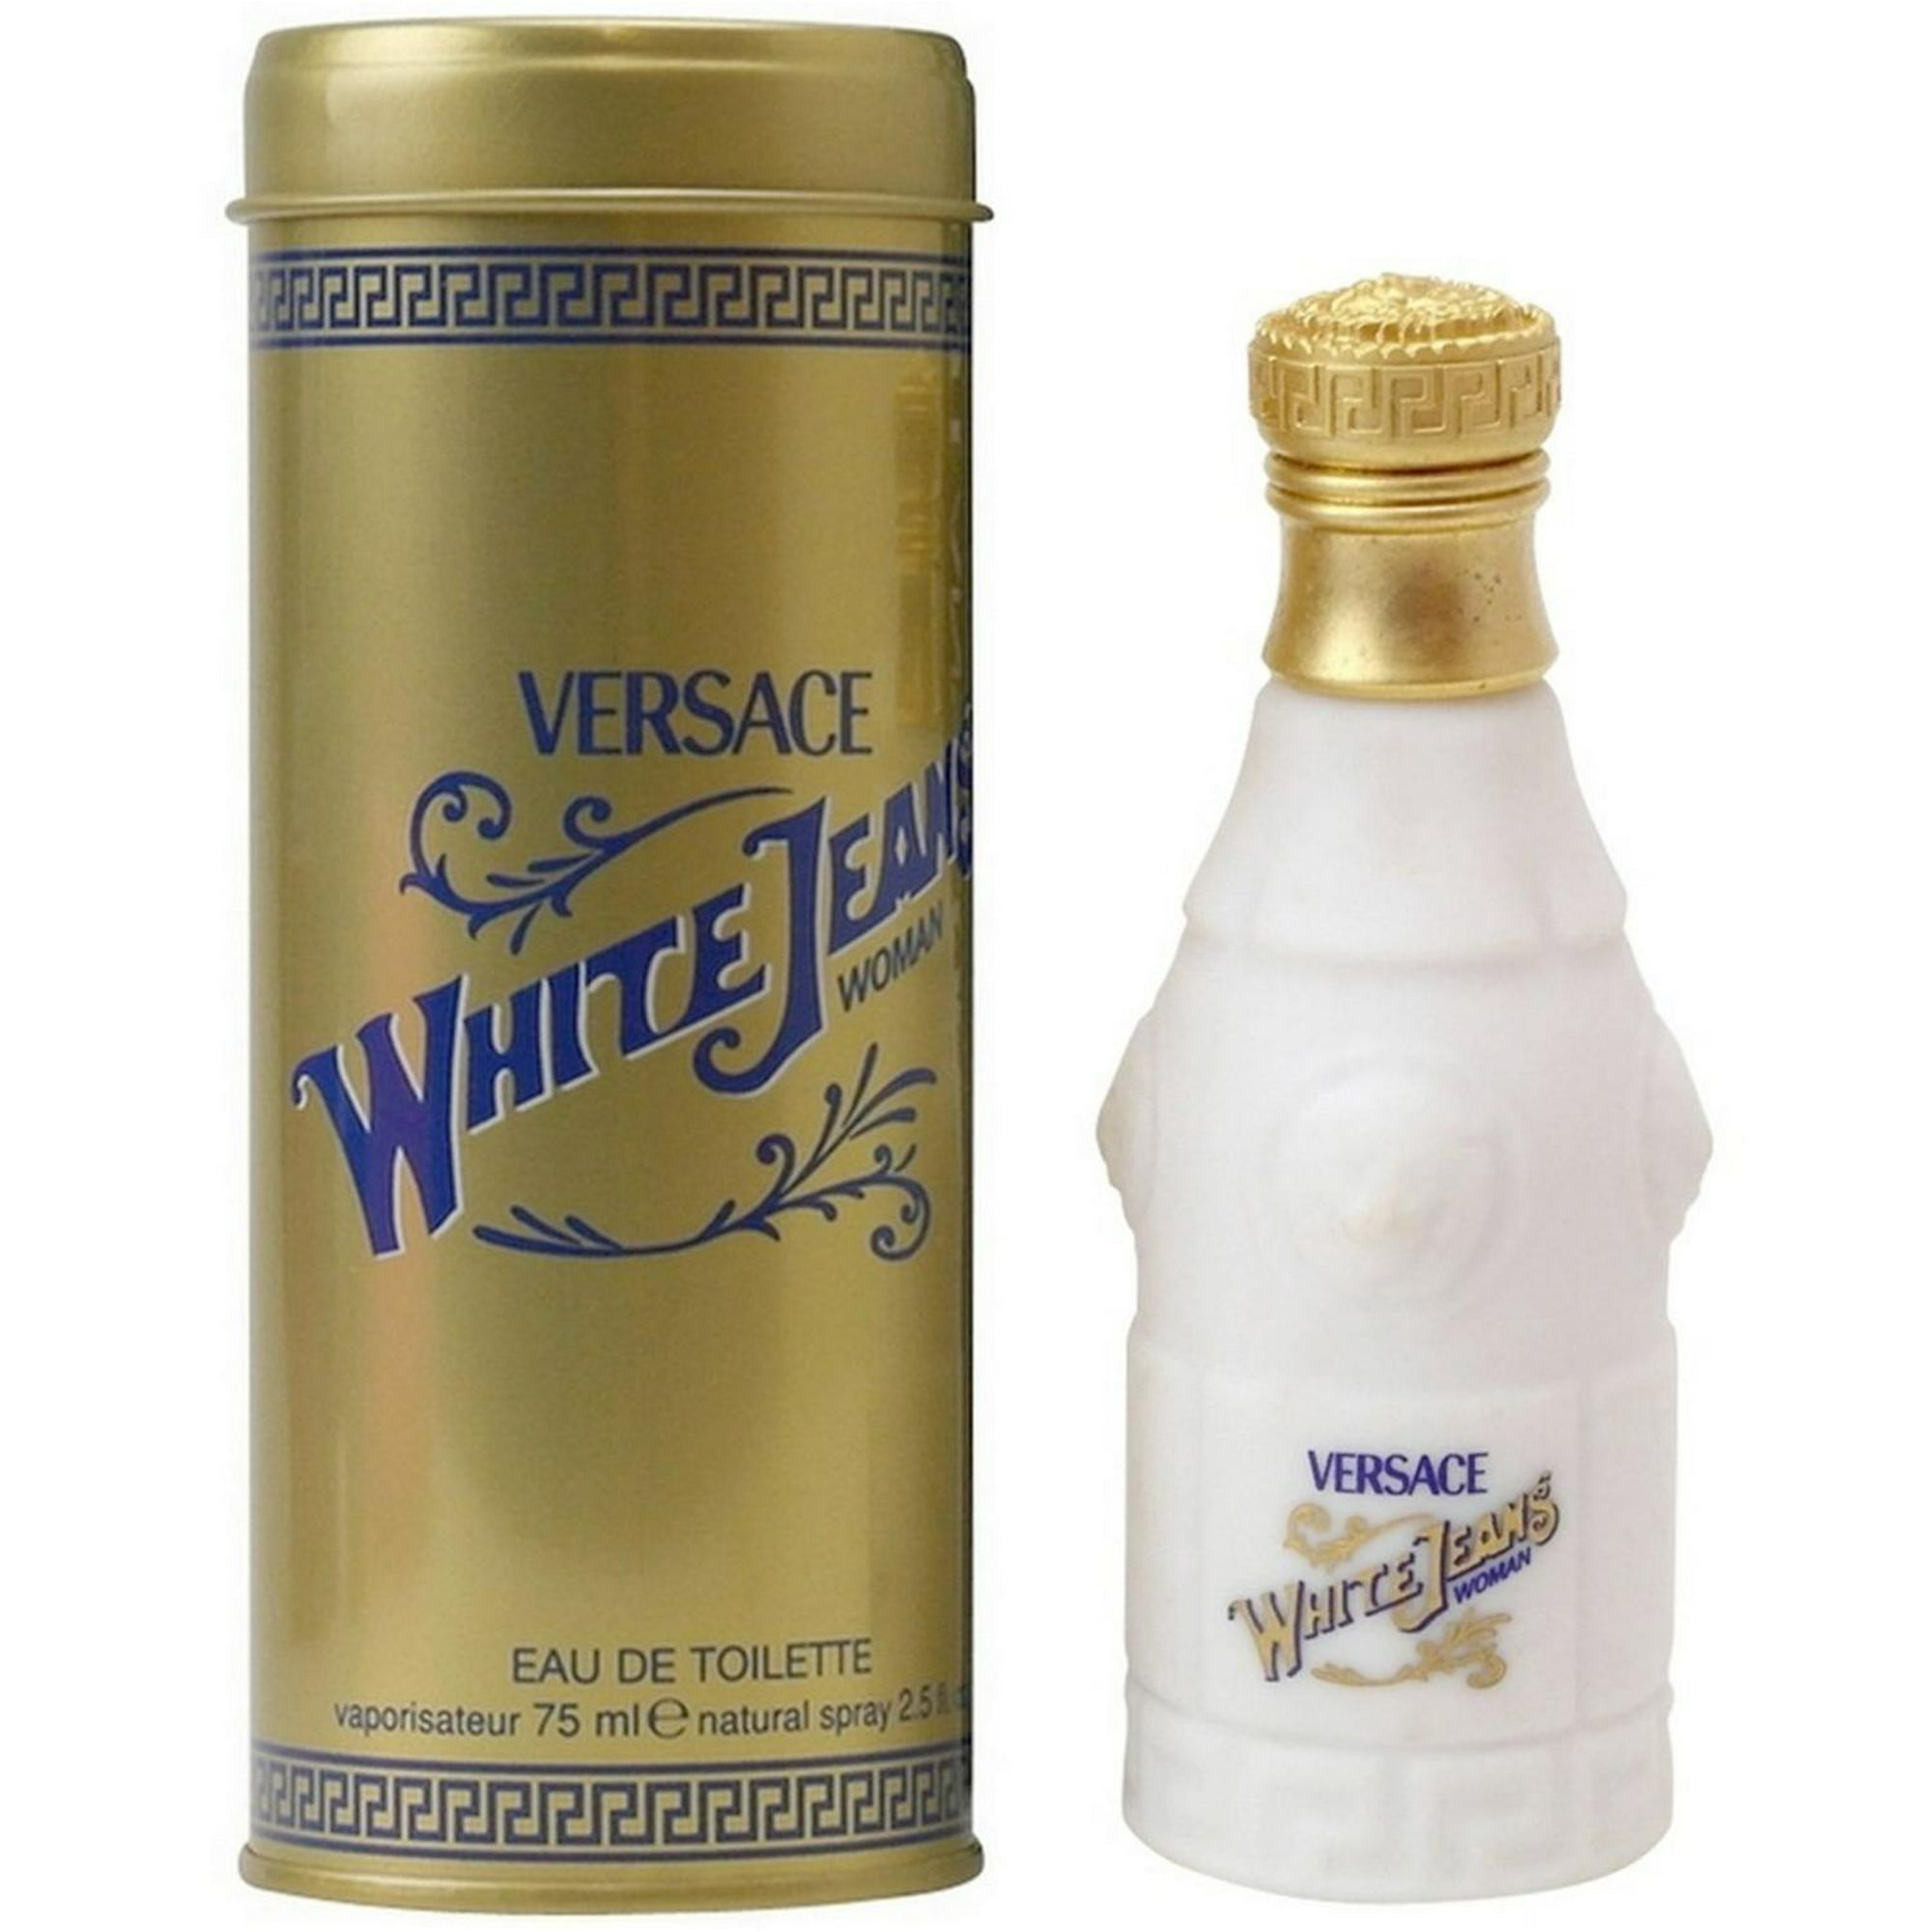 Perfume White Jeans de Versace EDT 75 ml Versace White Jeans | Bodega ...